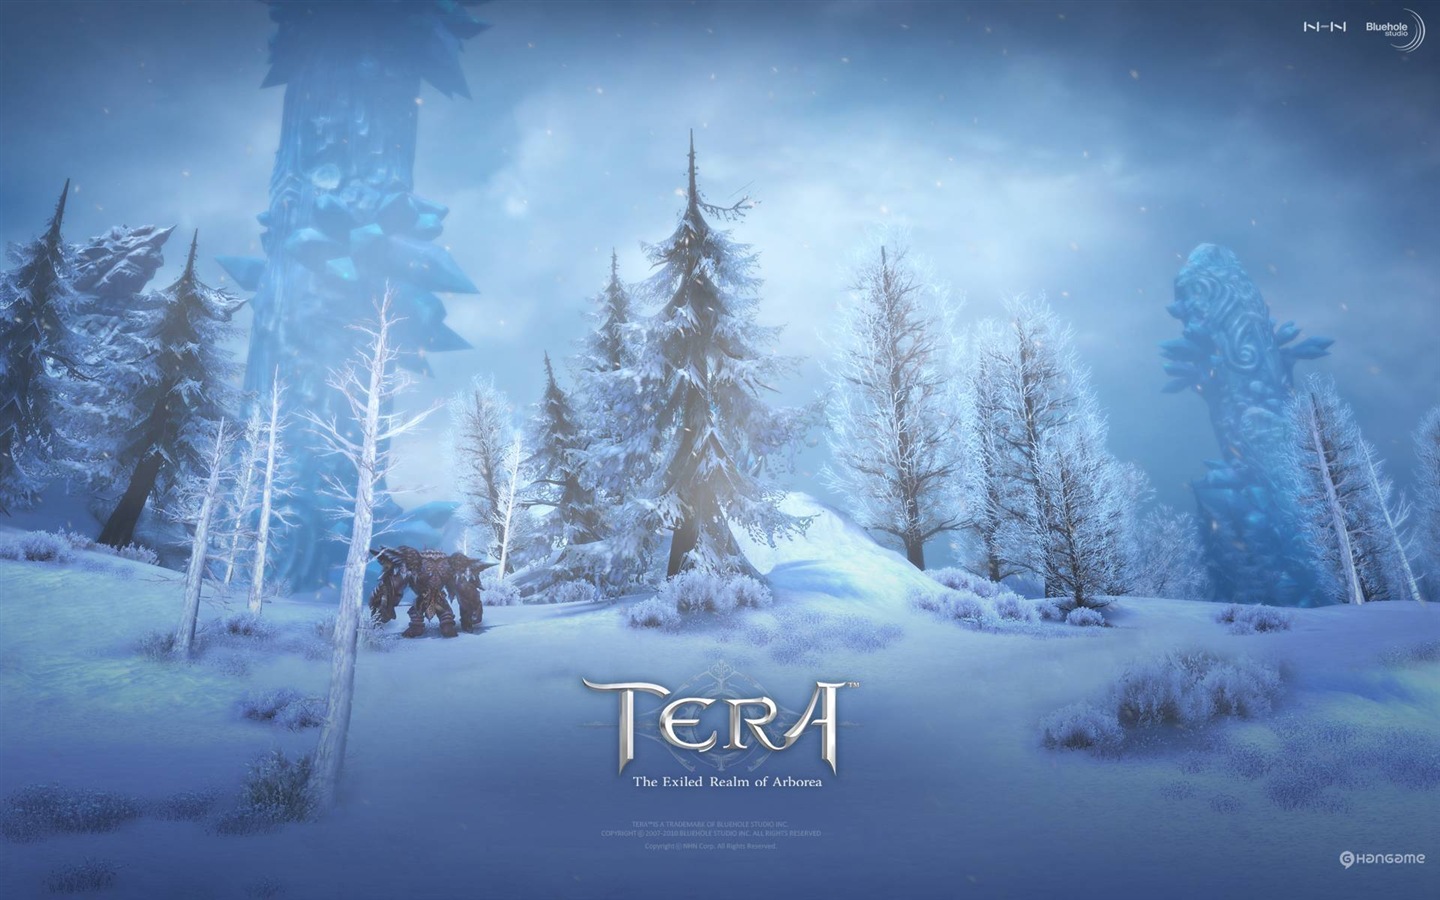 Tera HD game wallpapers #22 - 1440x900